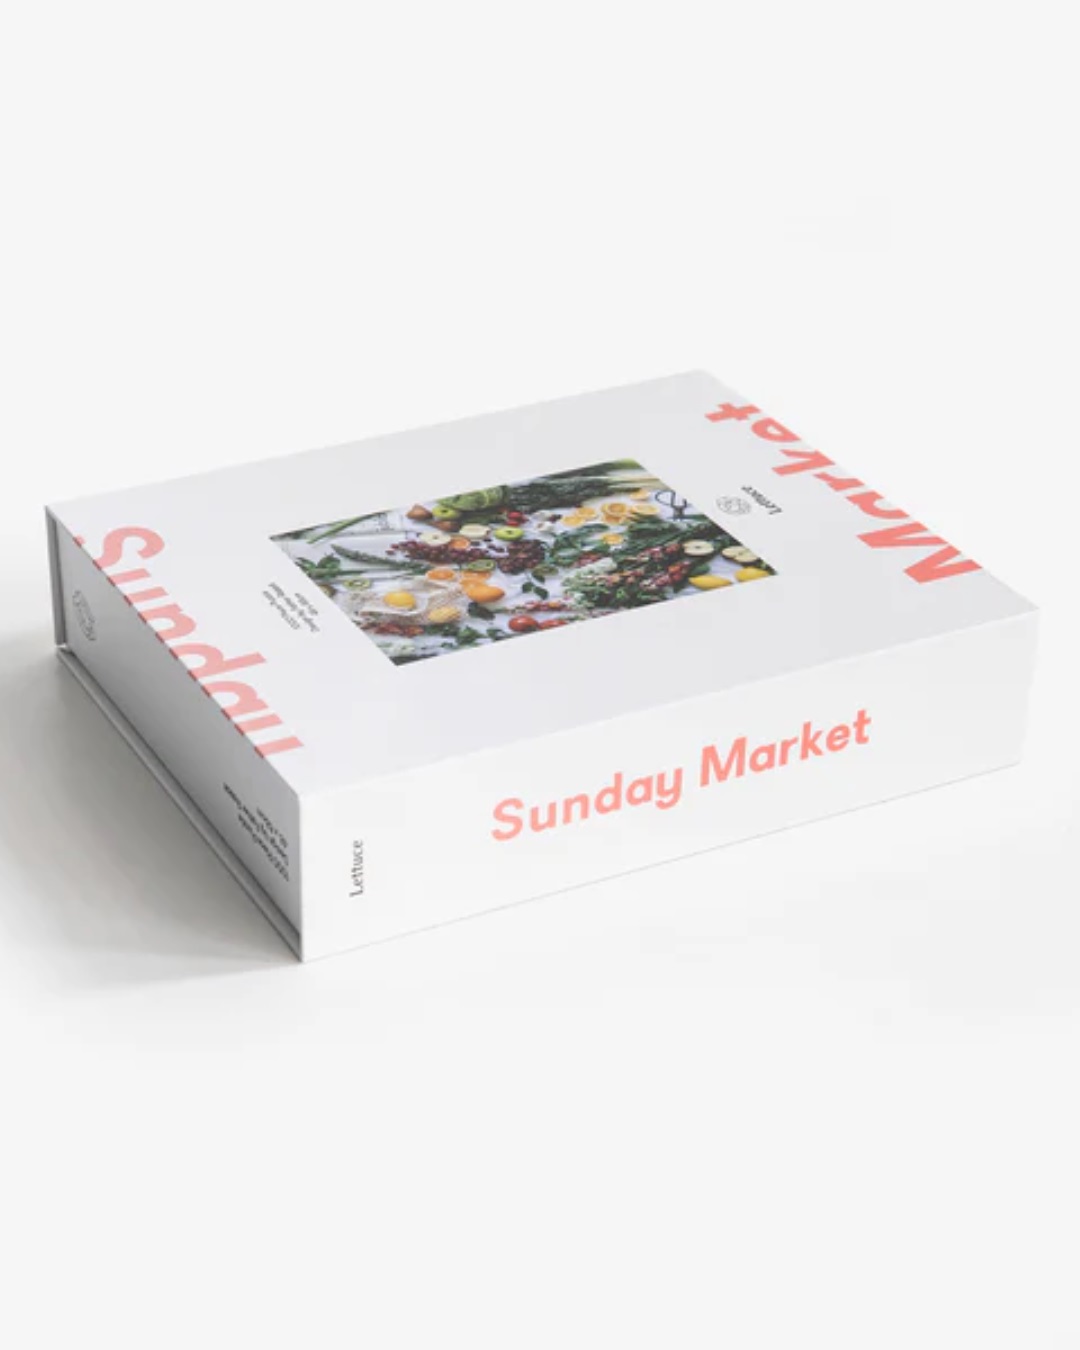 Sunday market puzzle in white box